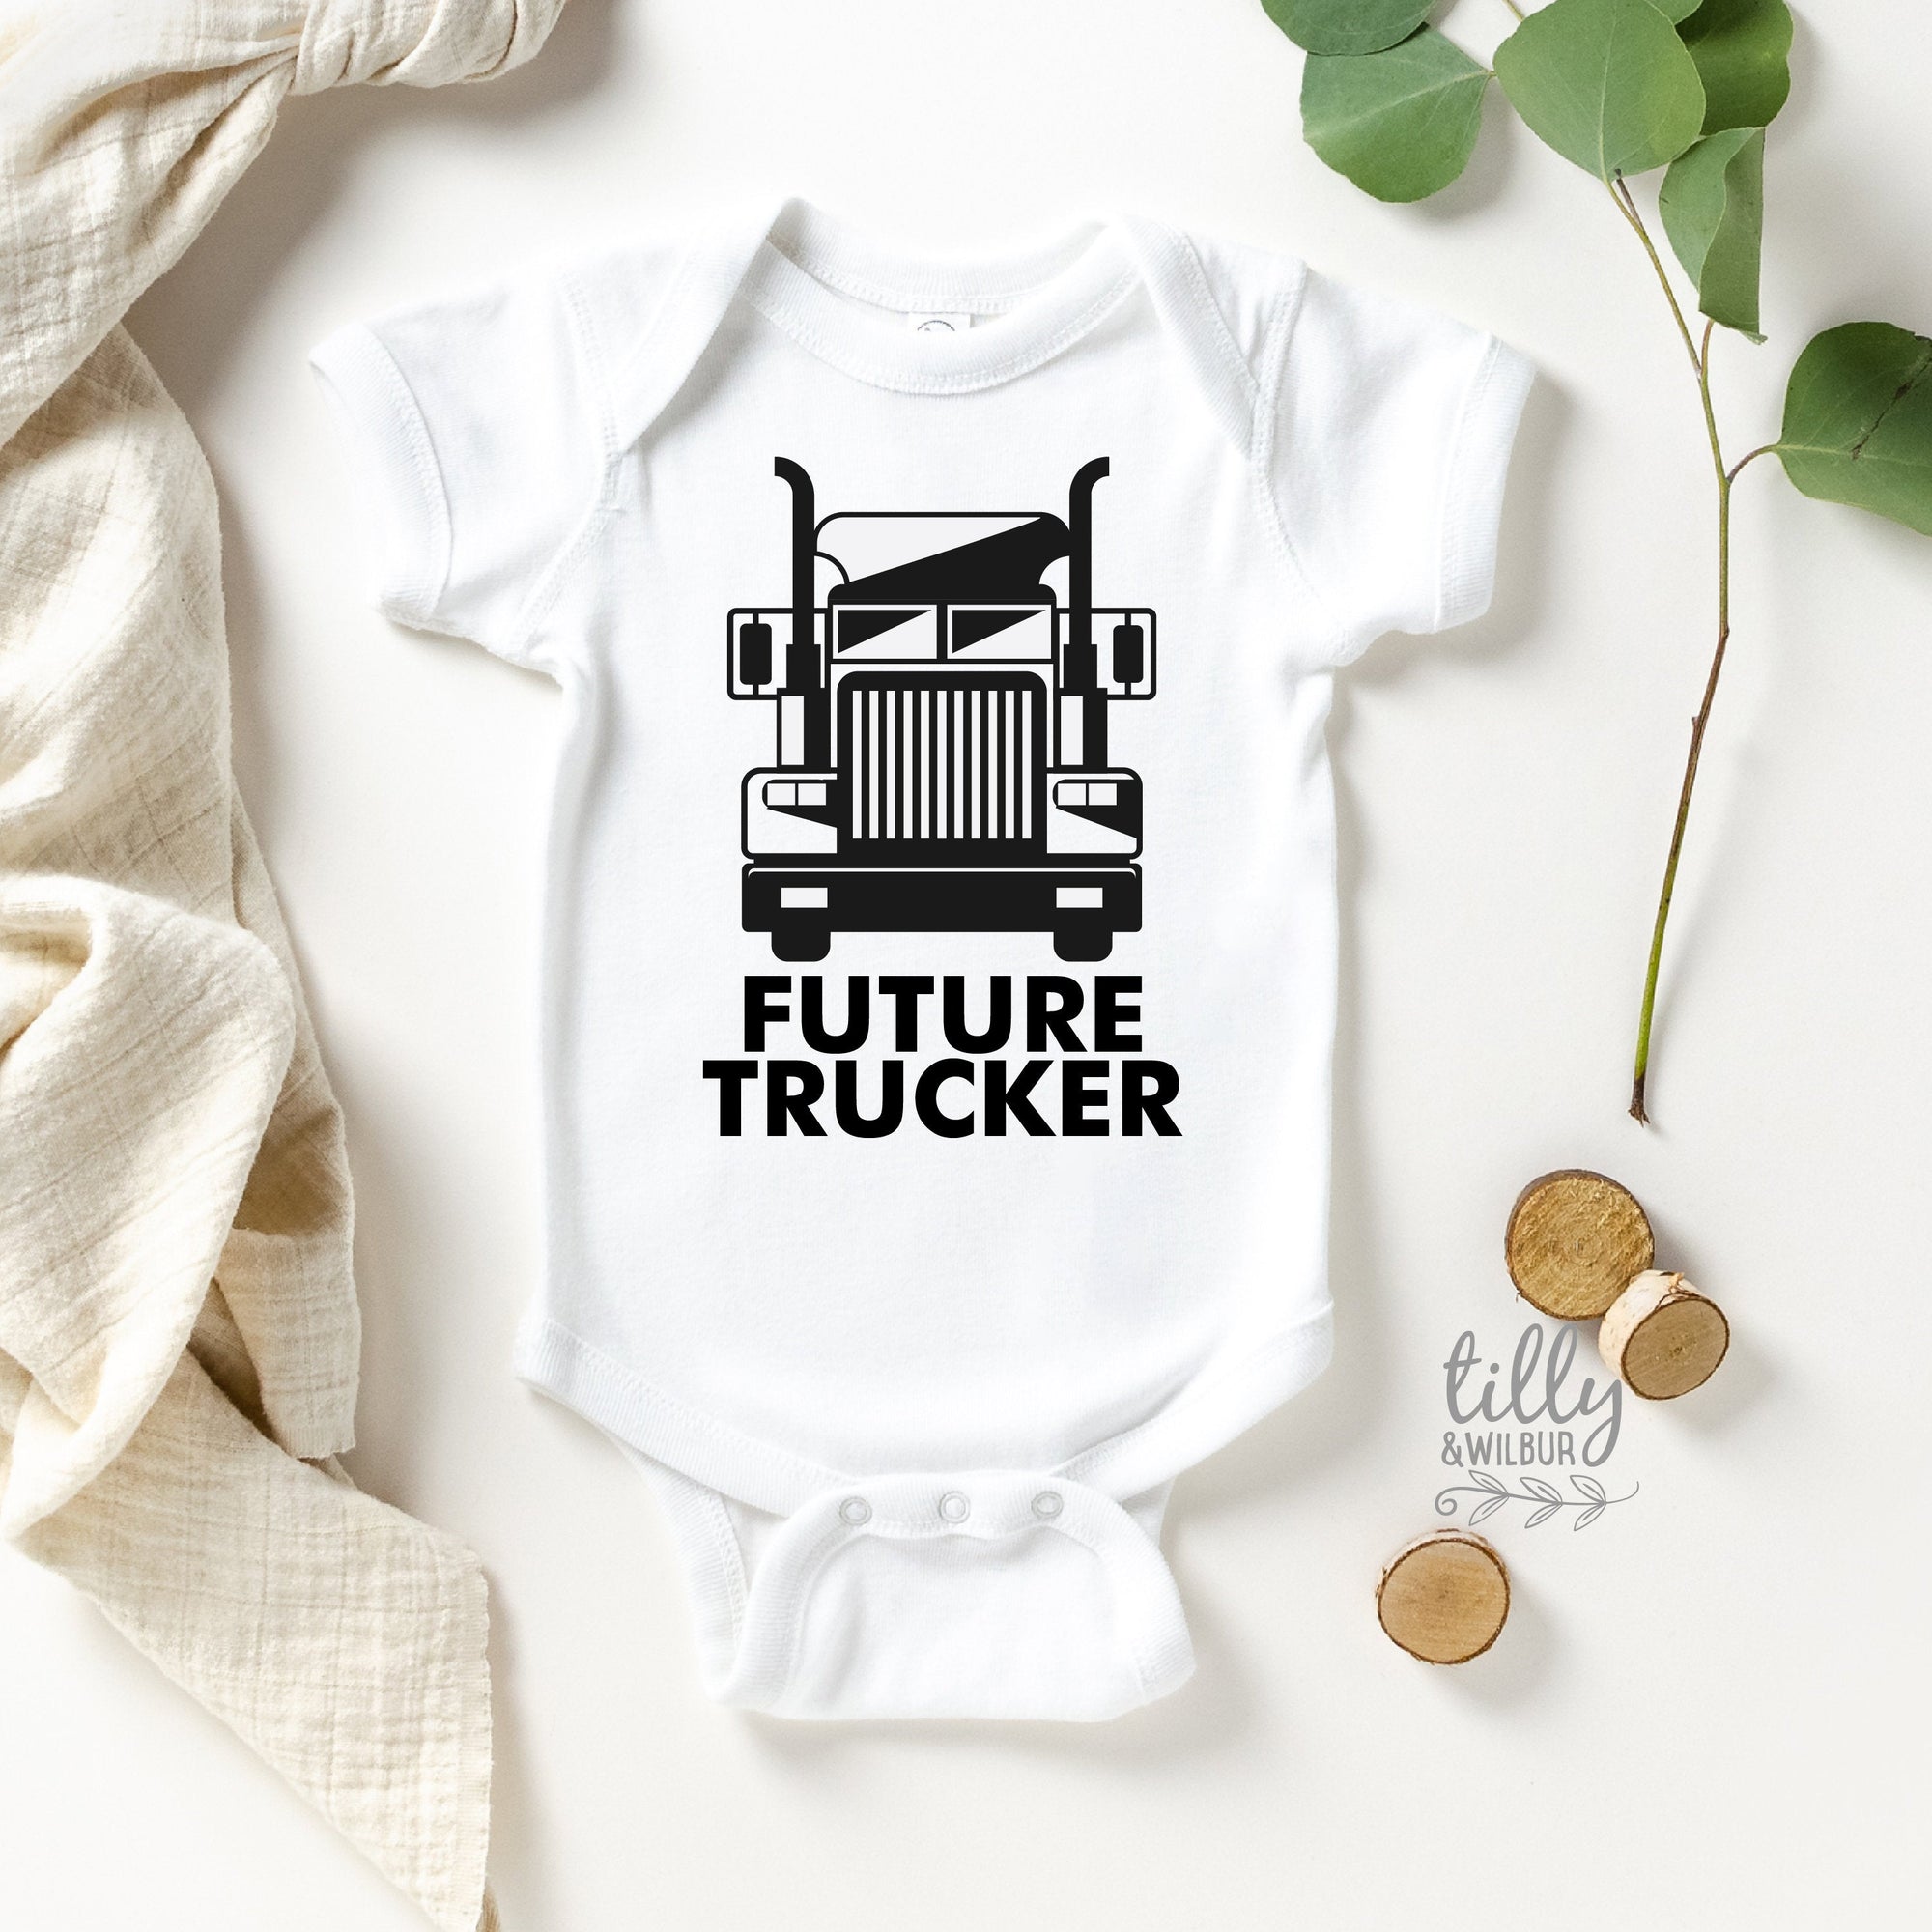 Future Trucker Kenworth Mack Pregnancy Announcement Baby Bodysuit, New Baby Announcement, Baby Shower, Mack Truck, Daddy Is A Truck Driver